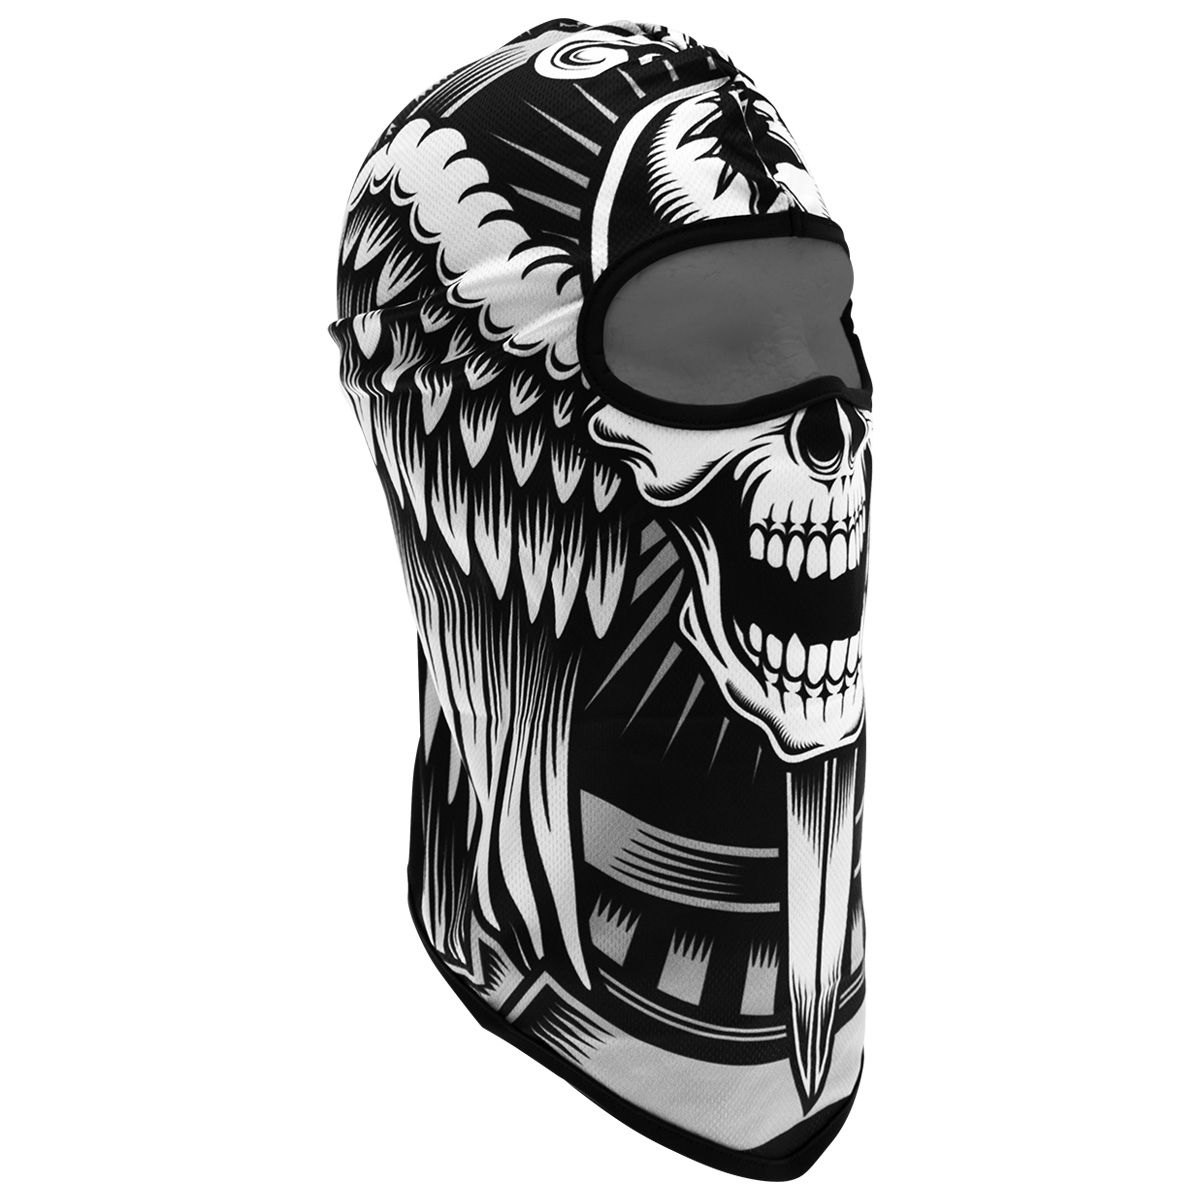 Cagoule moto Zan Headgear full face skull ghost - Cagoules